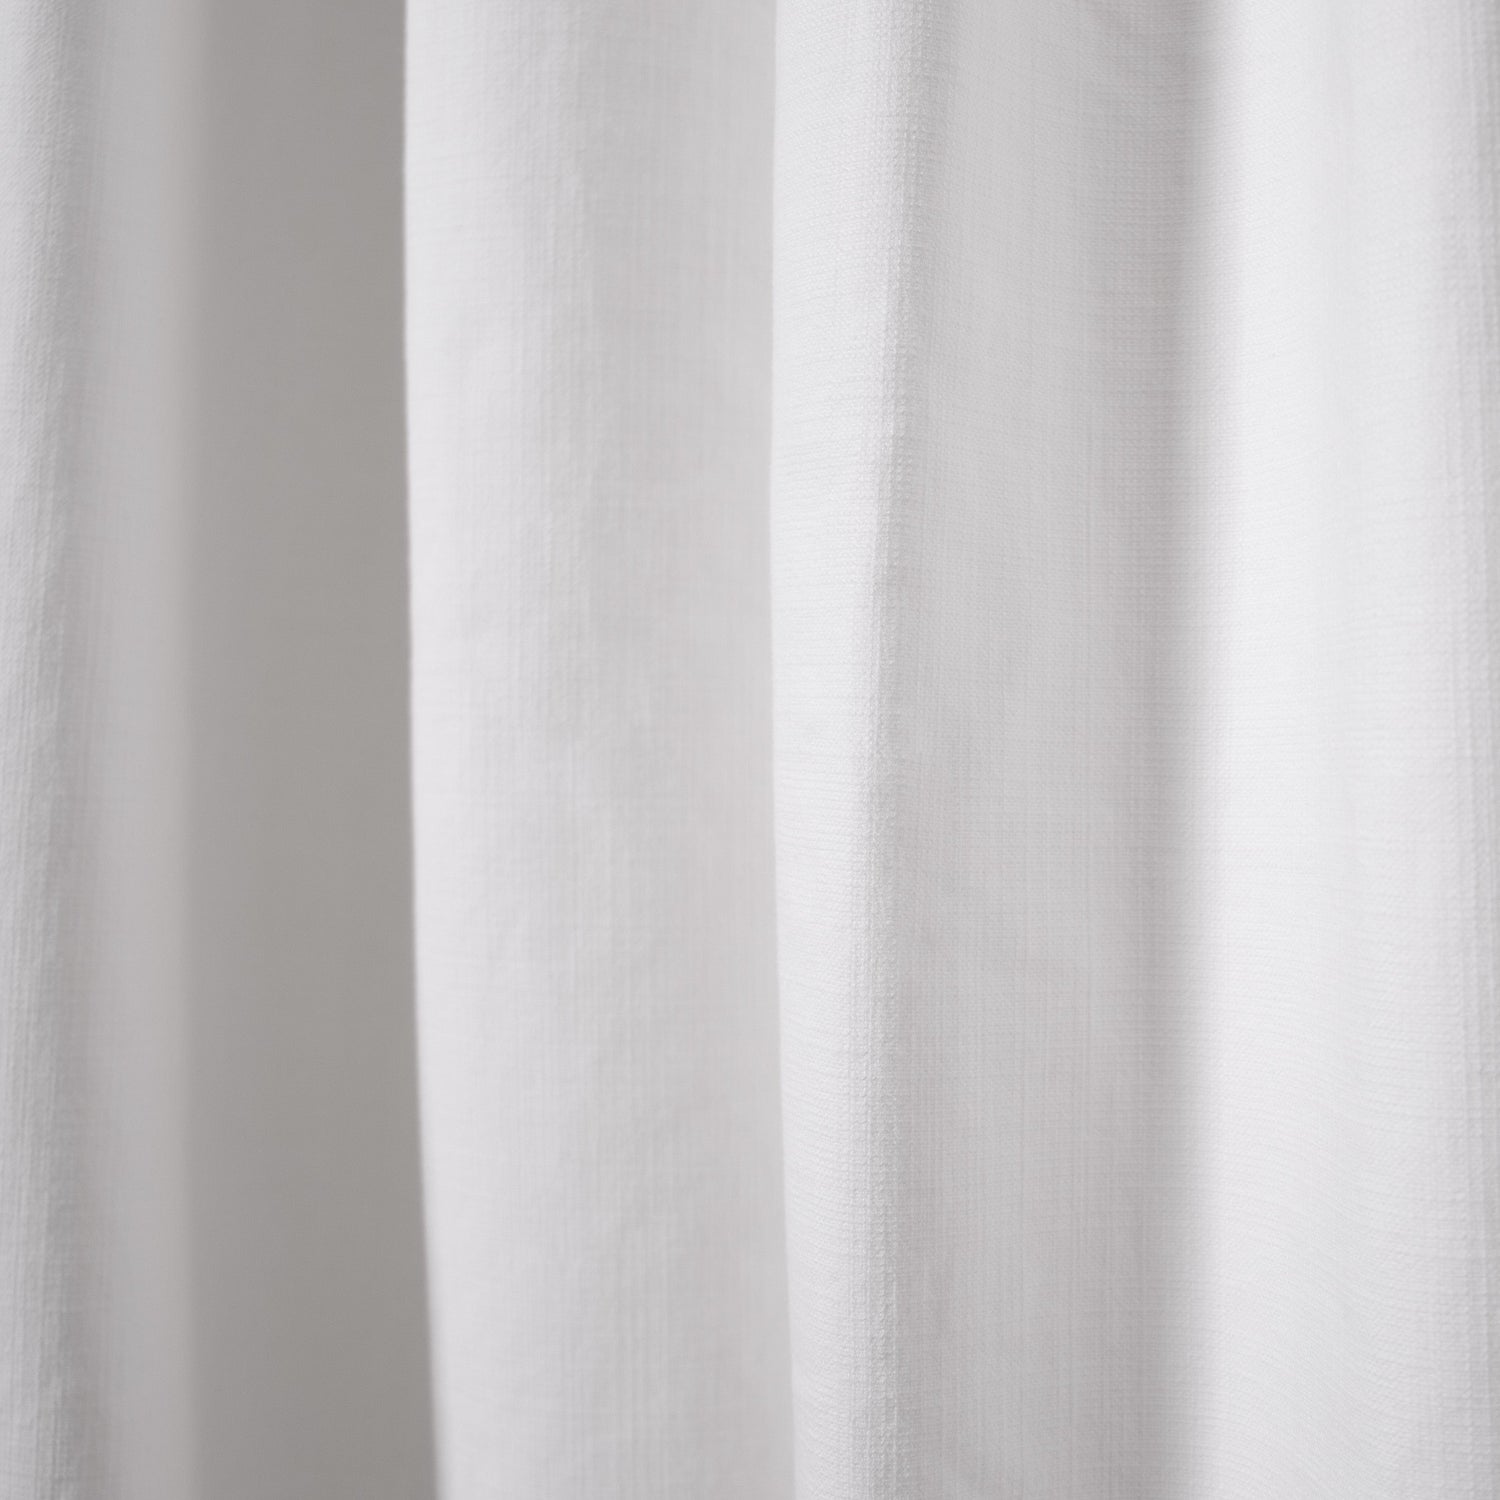 White Cotton Curtain Close-up